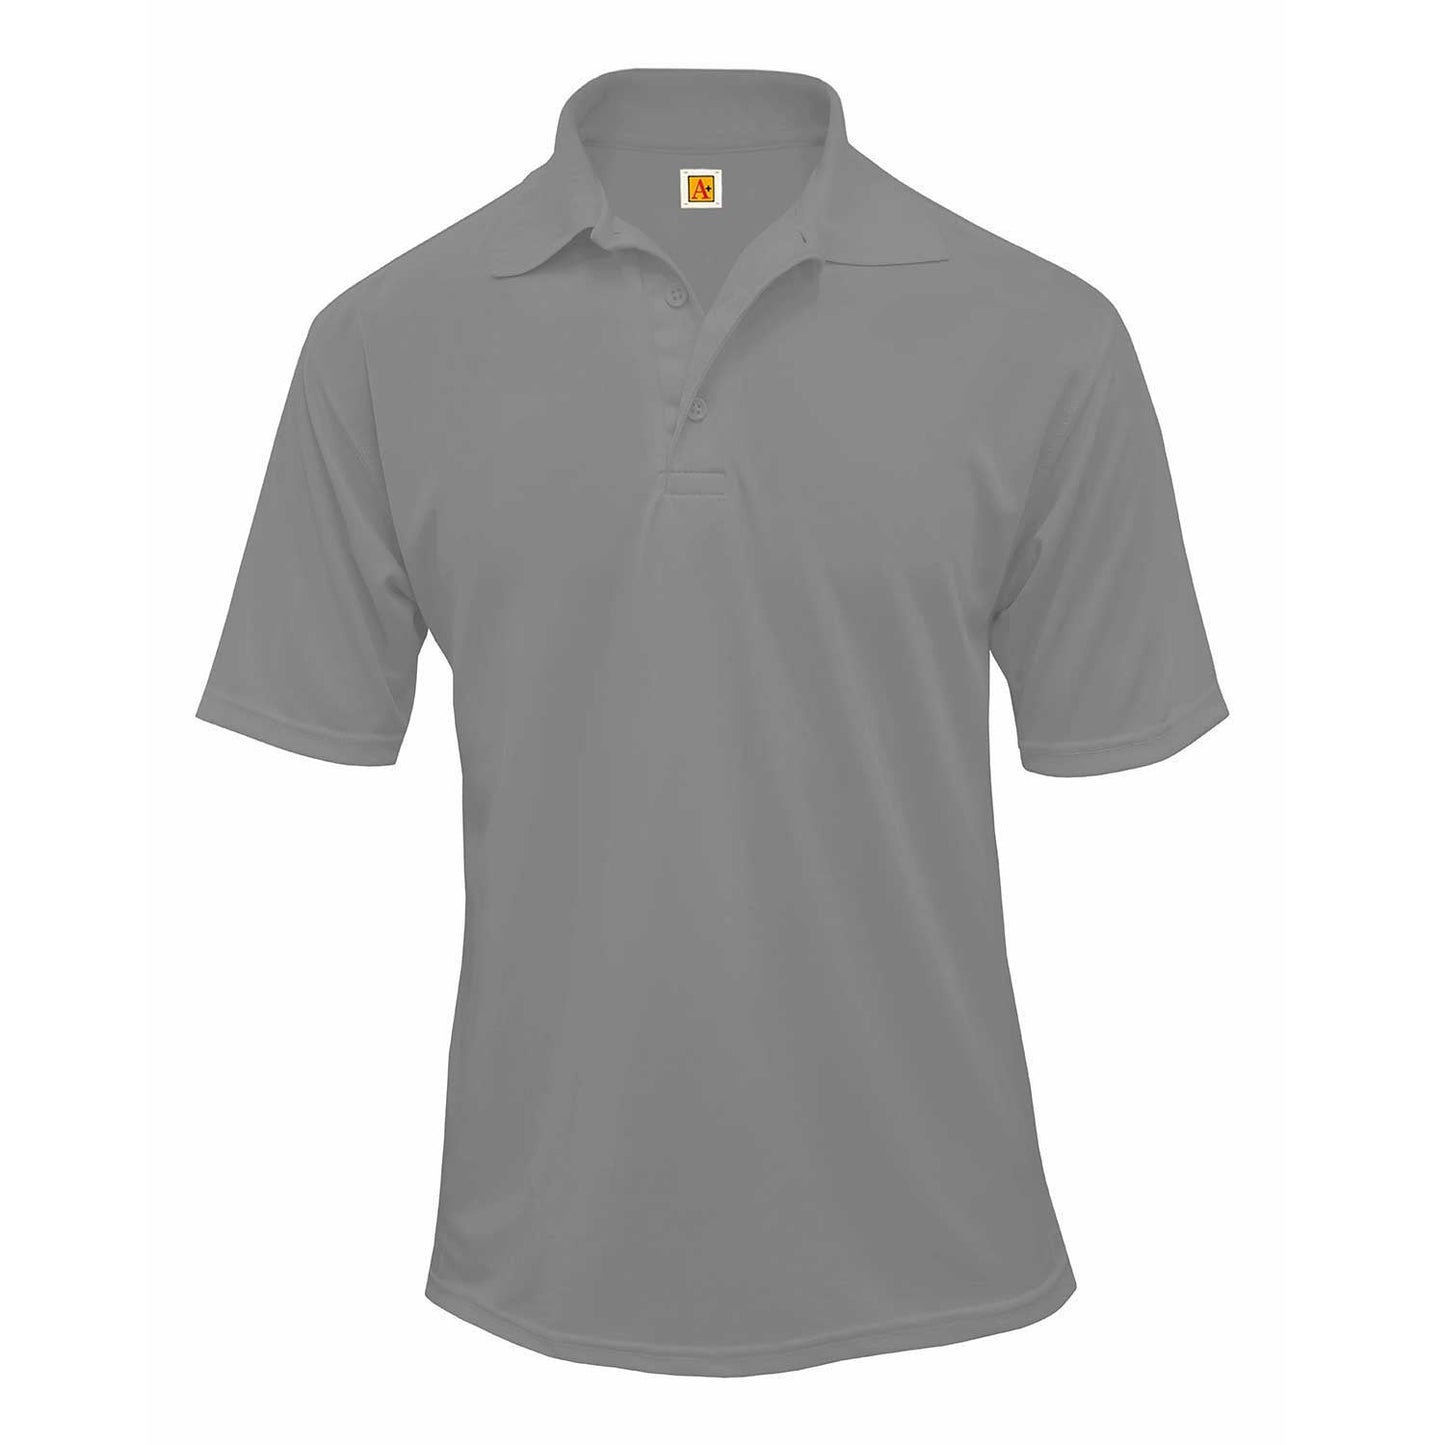 Performance Dri-fit Jersey Knit Short Sleeve Shirt (Unisex) w/Logo - 1105